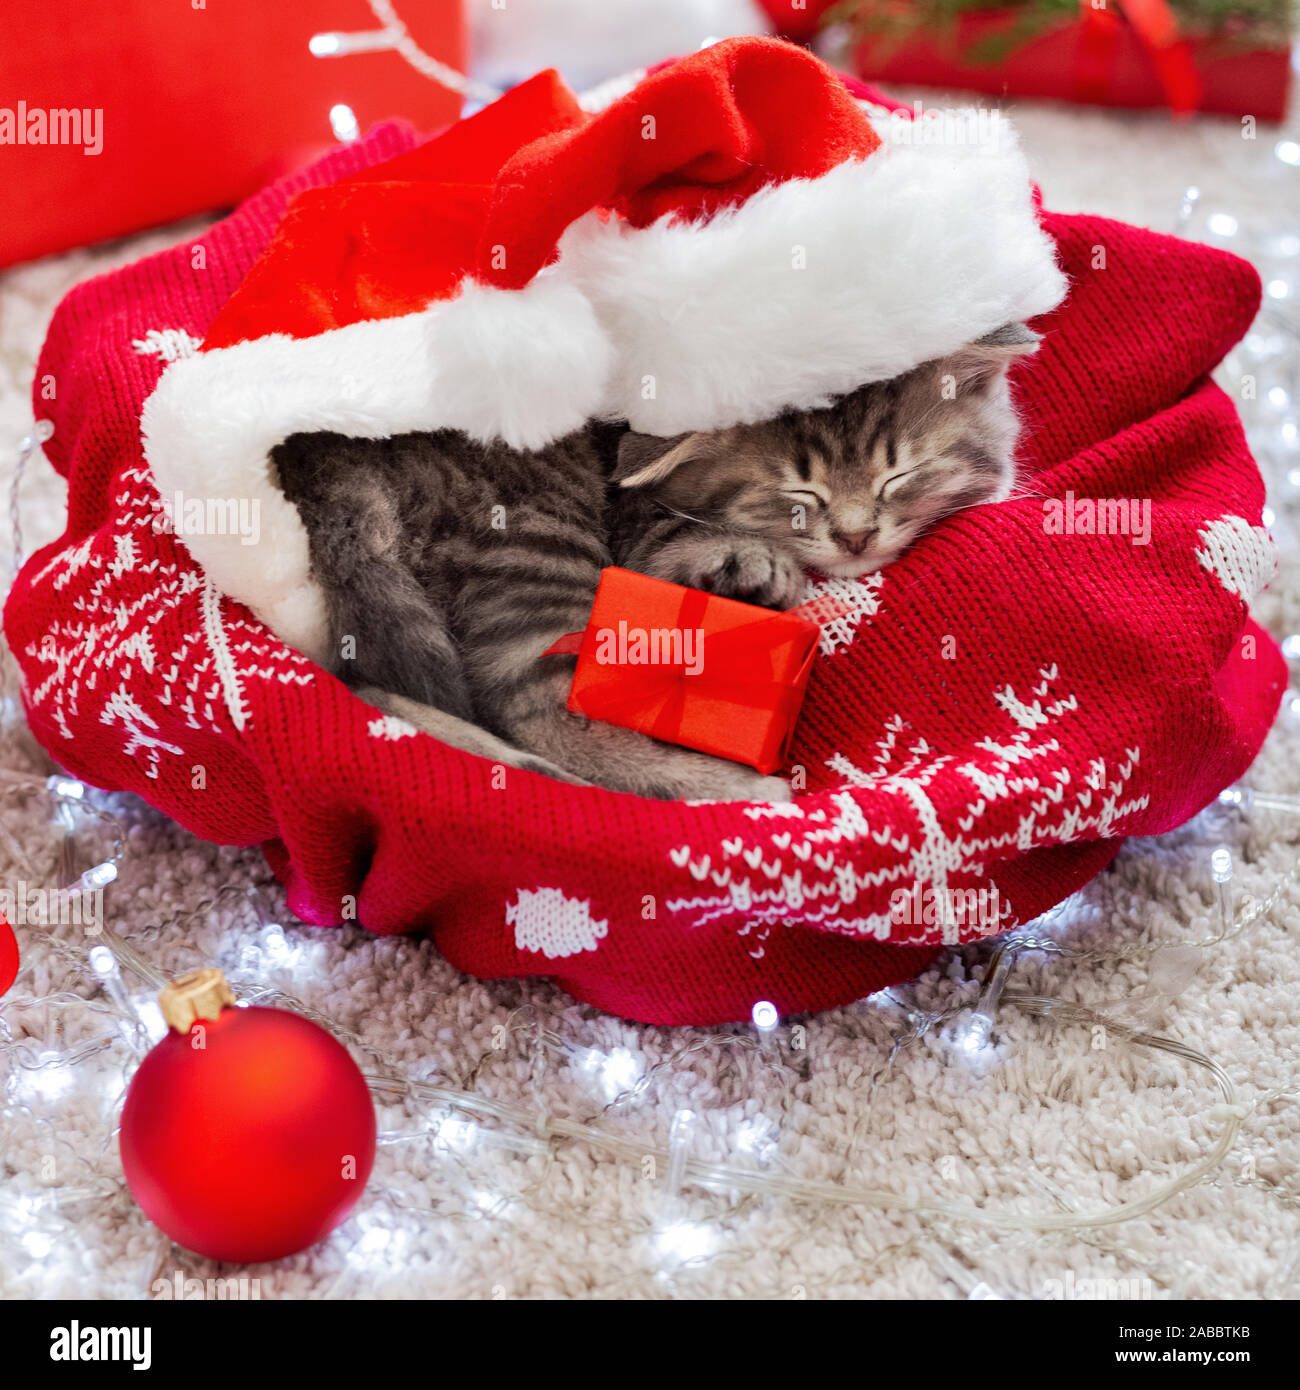 Christmas Cat Wearing Santa Claus Hat Holding Gift Box Sleeping On Plaid Under Christmas Tree Christmas Presents Concept Cozy Home Animal Pet Kit Stock Photo Alamy